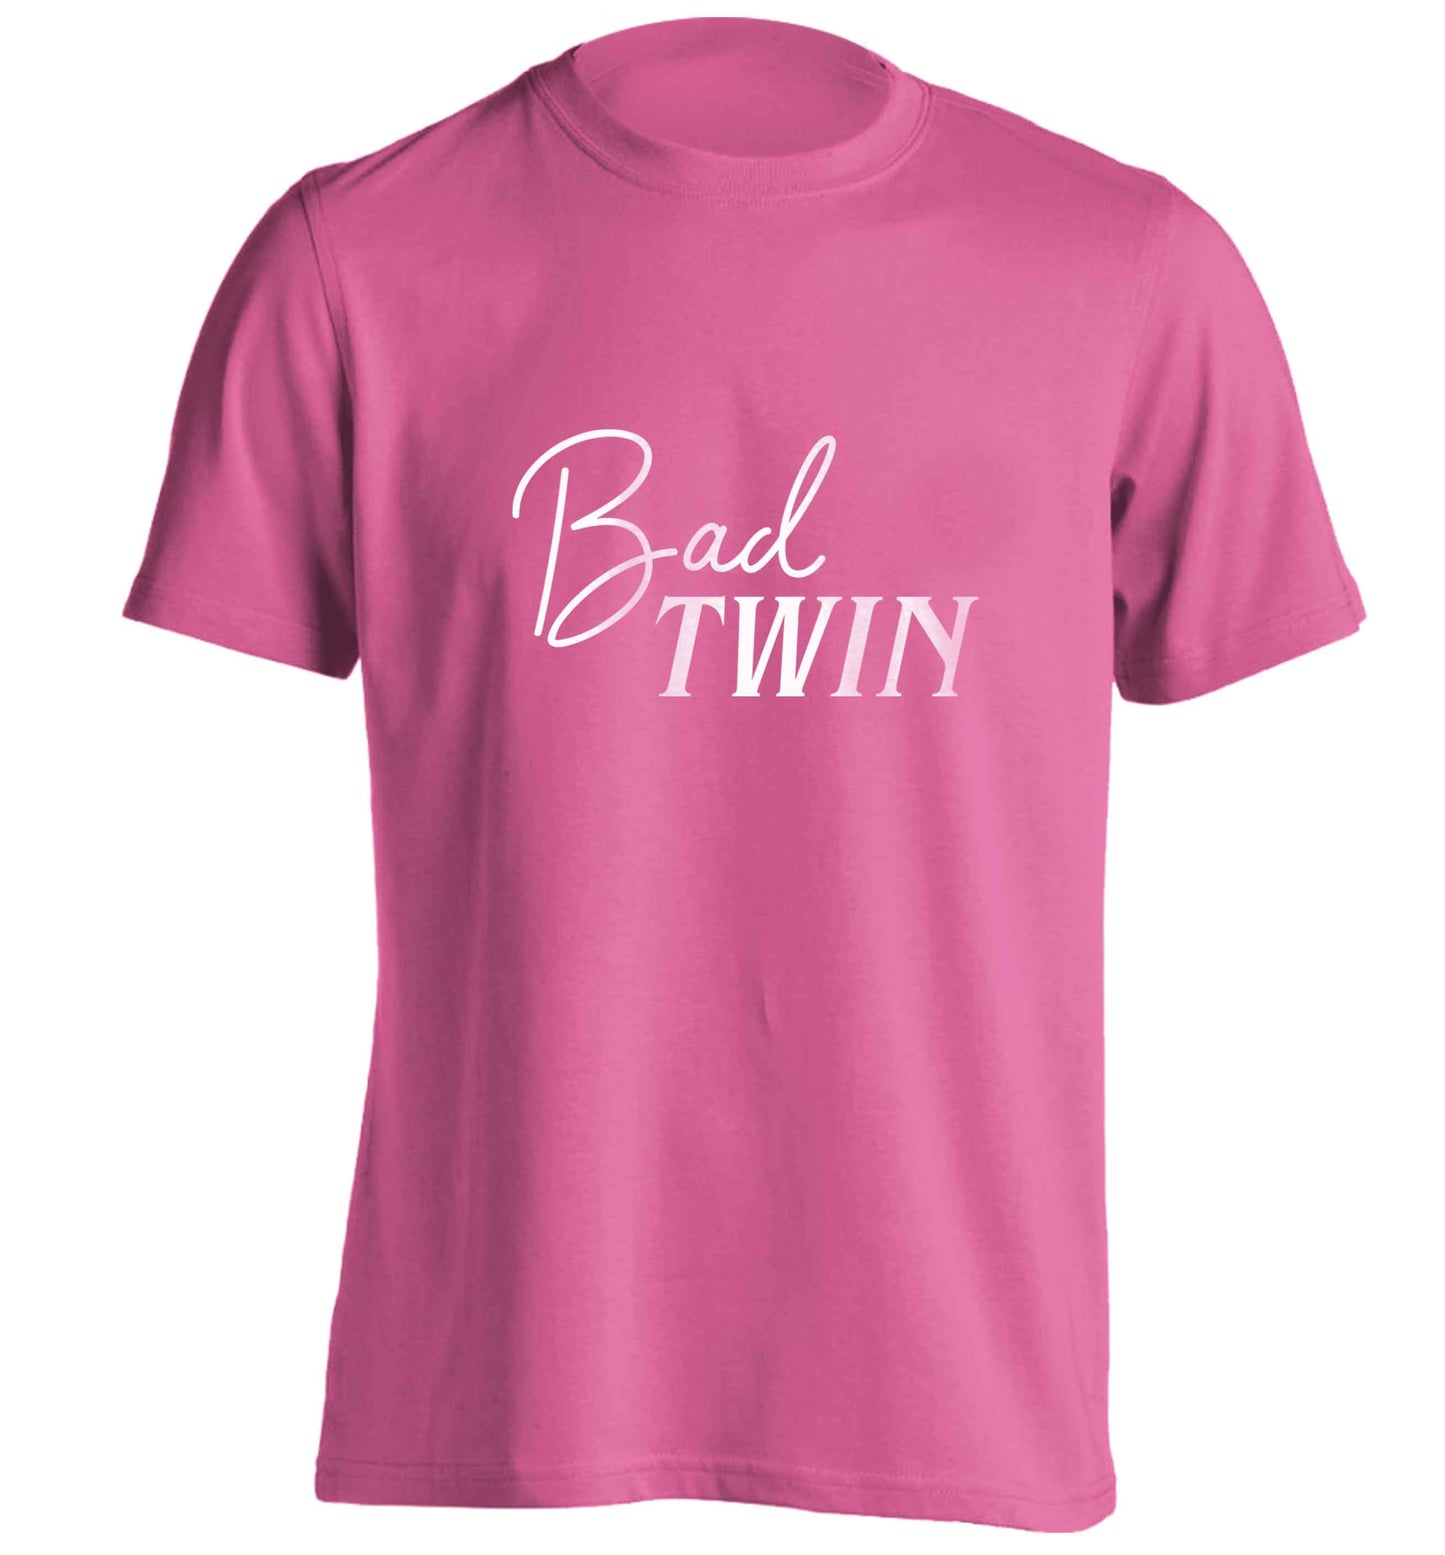 Bad twin adults unisex pink Tshirt 2XL